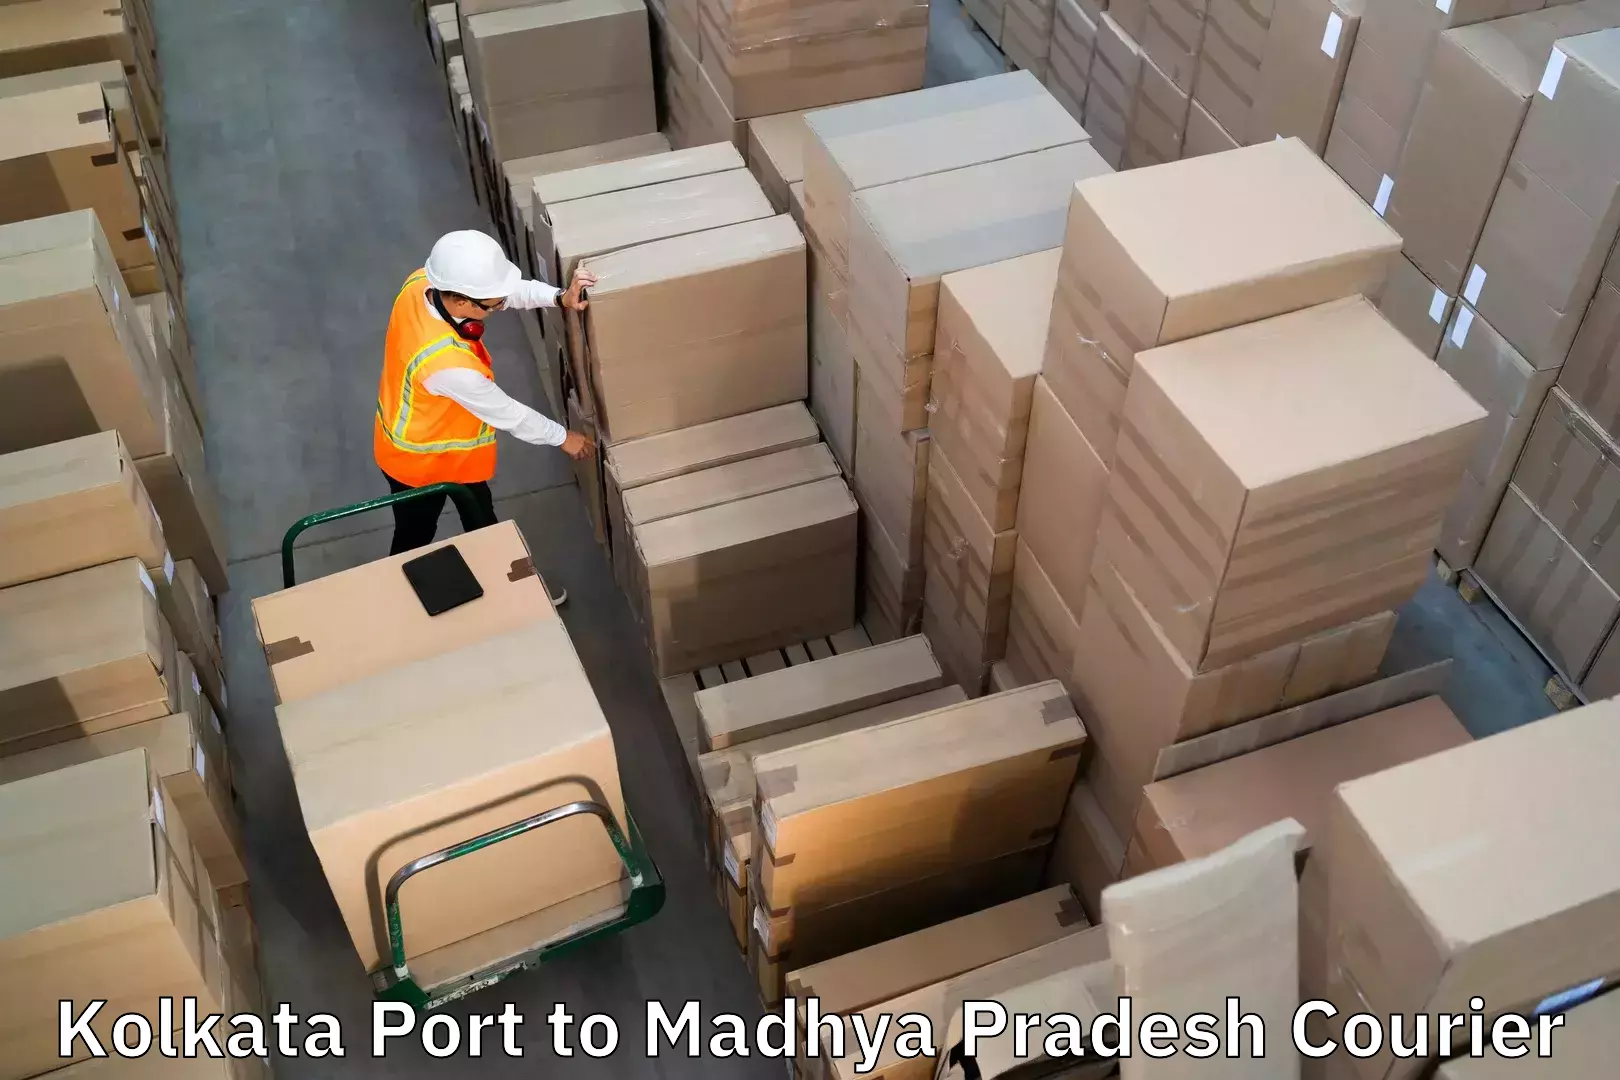 Baggage transport network Kolkata Port to Tendukheda